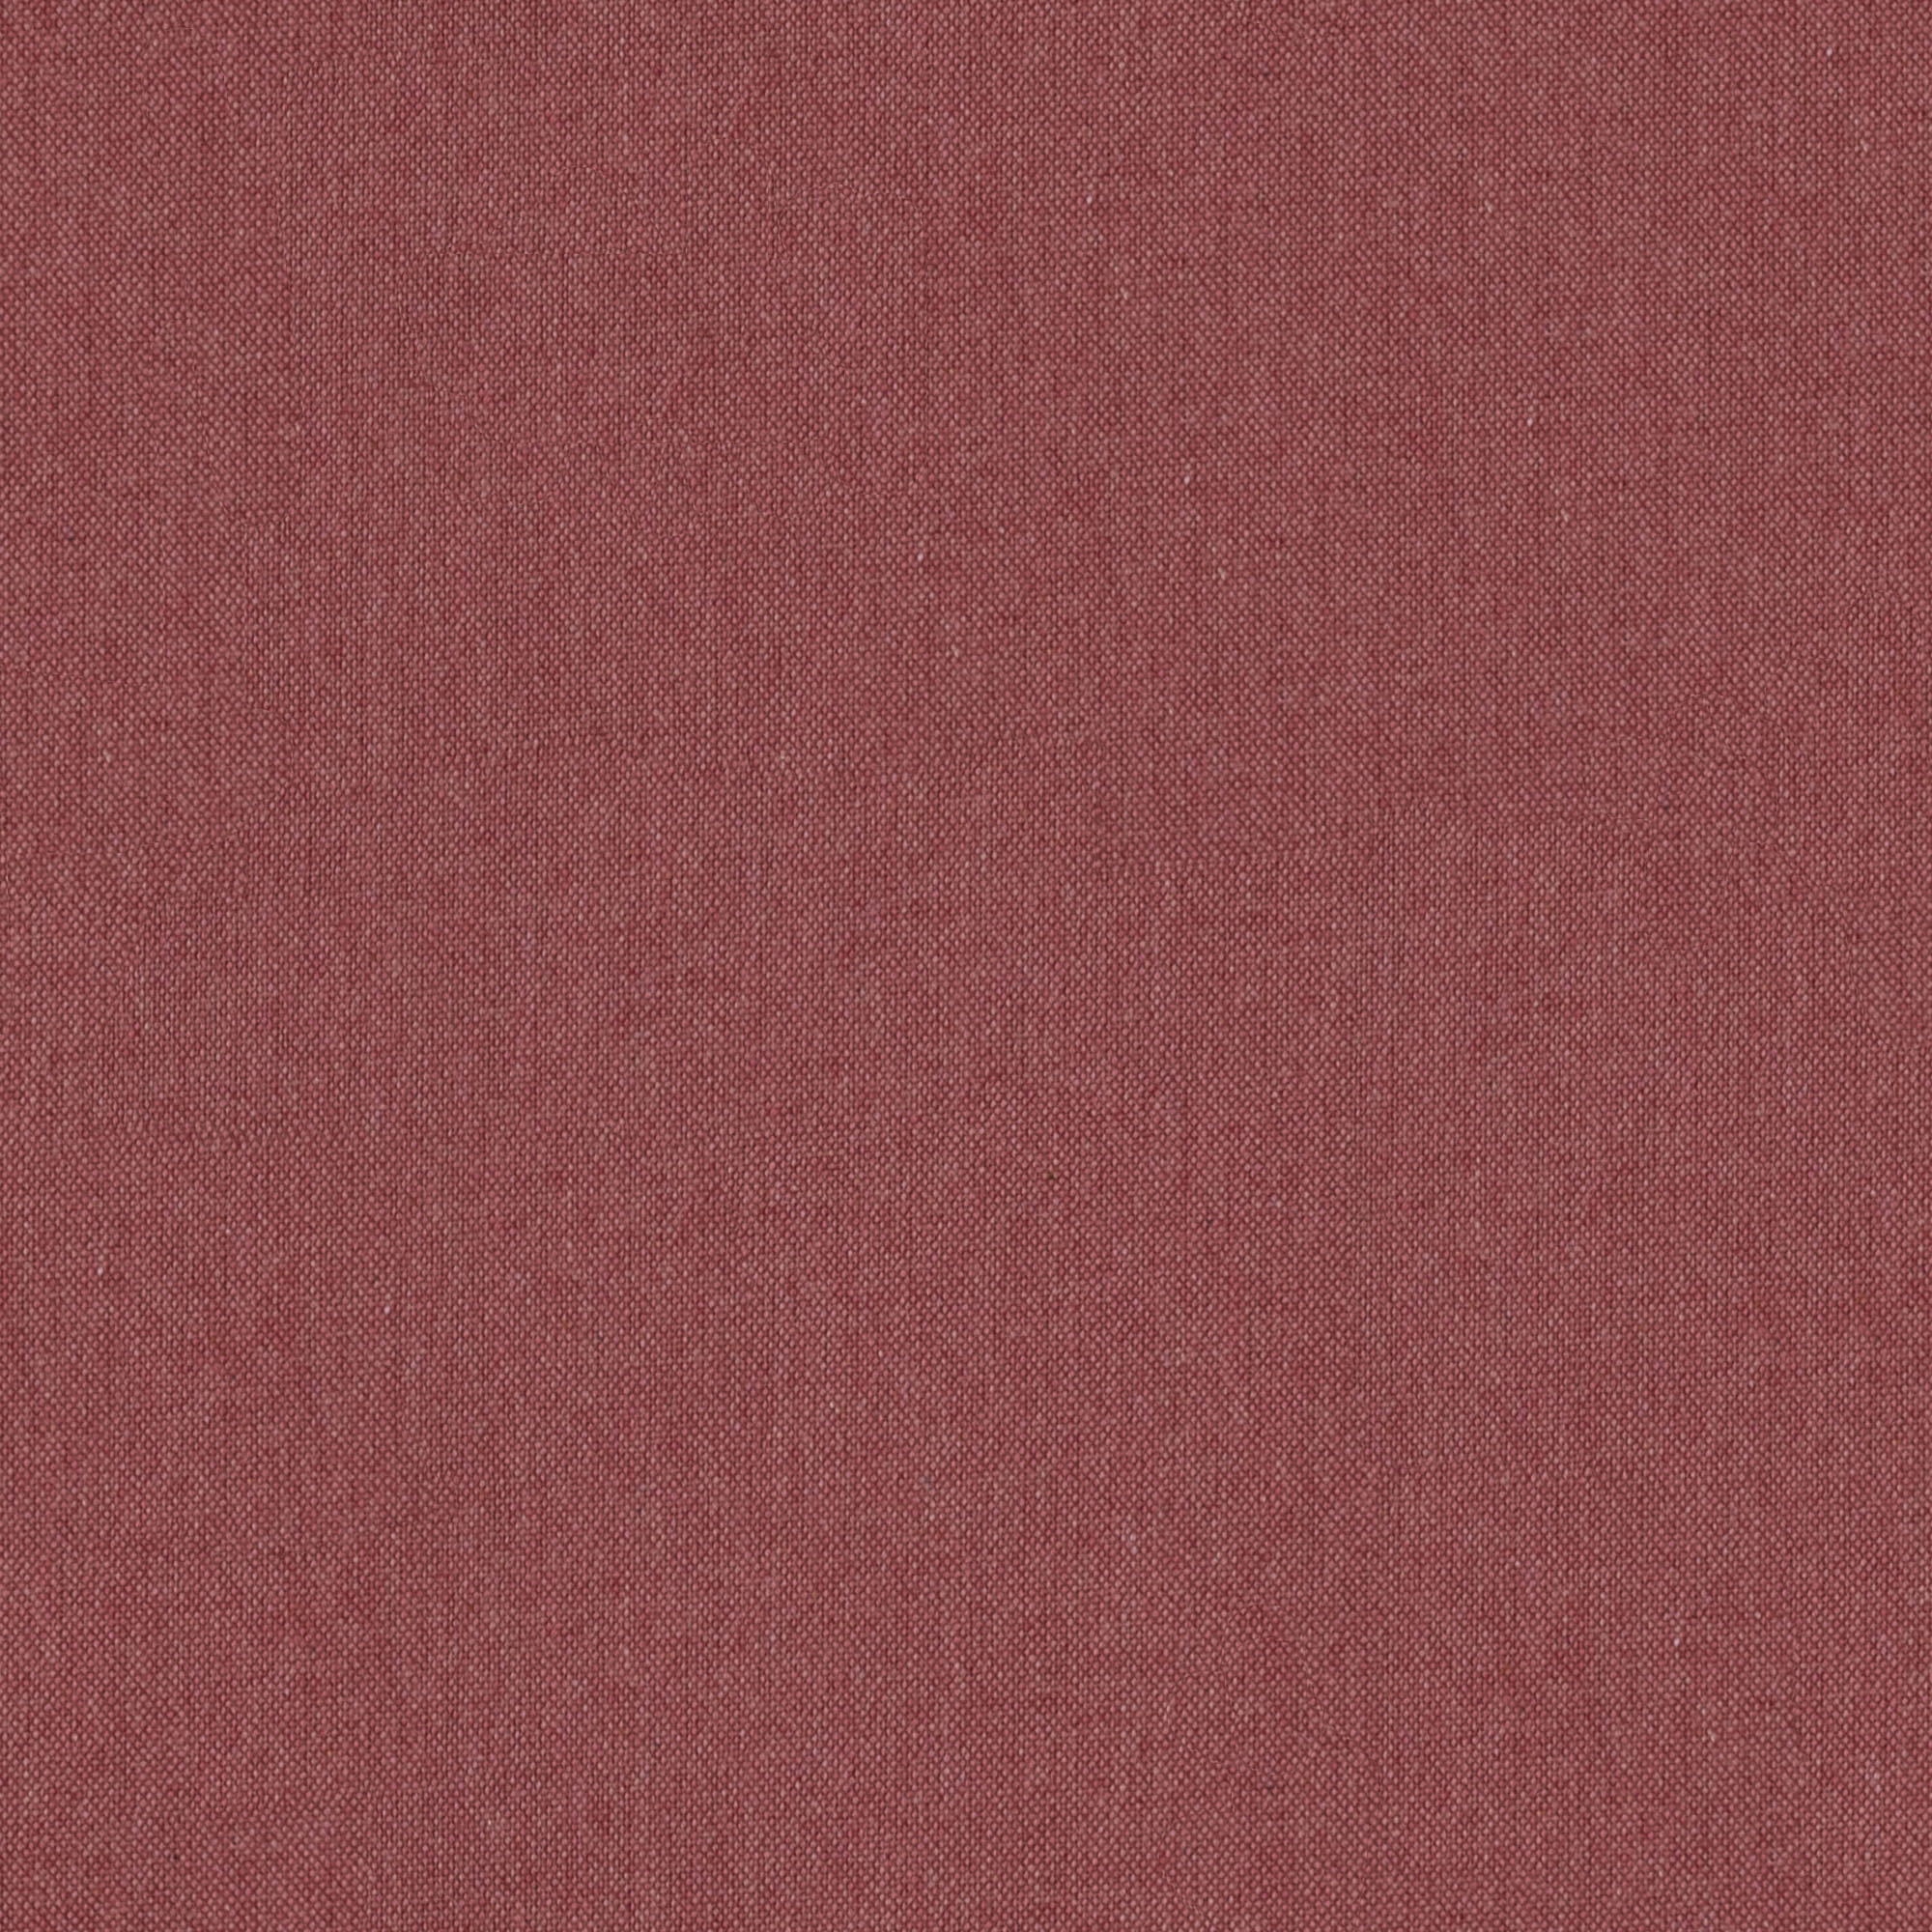 Melange Plain Rosewood Fabric